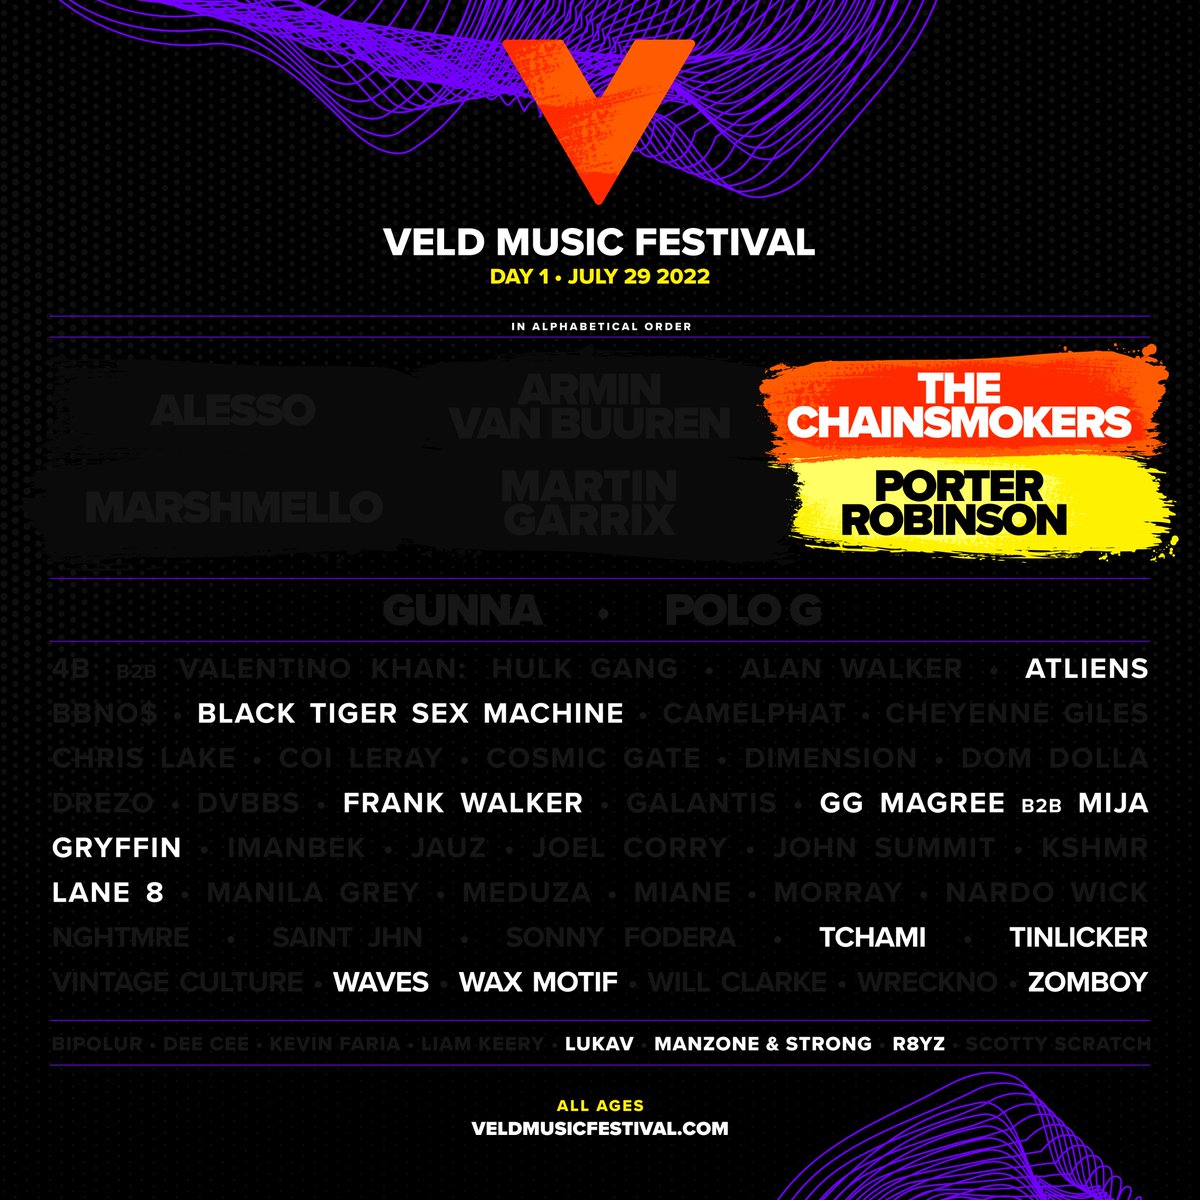 2022 Veld Music Festival schedule